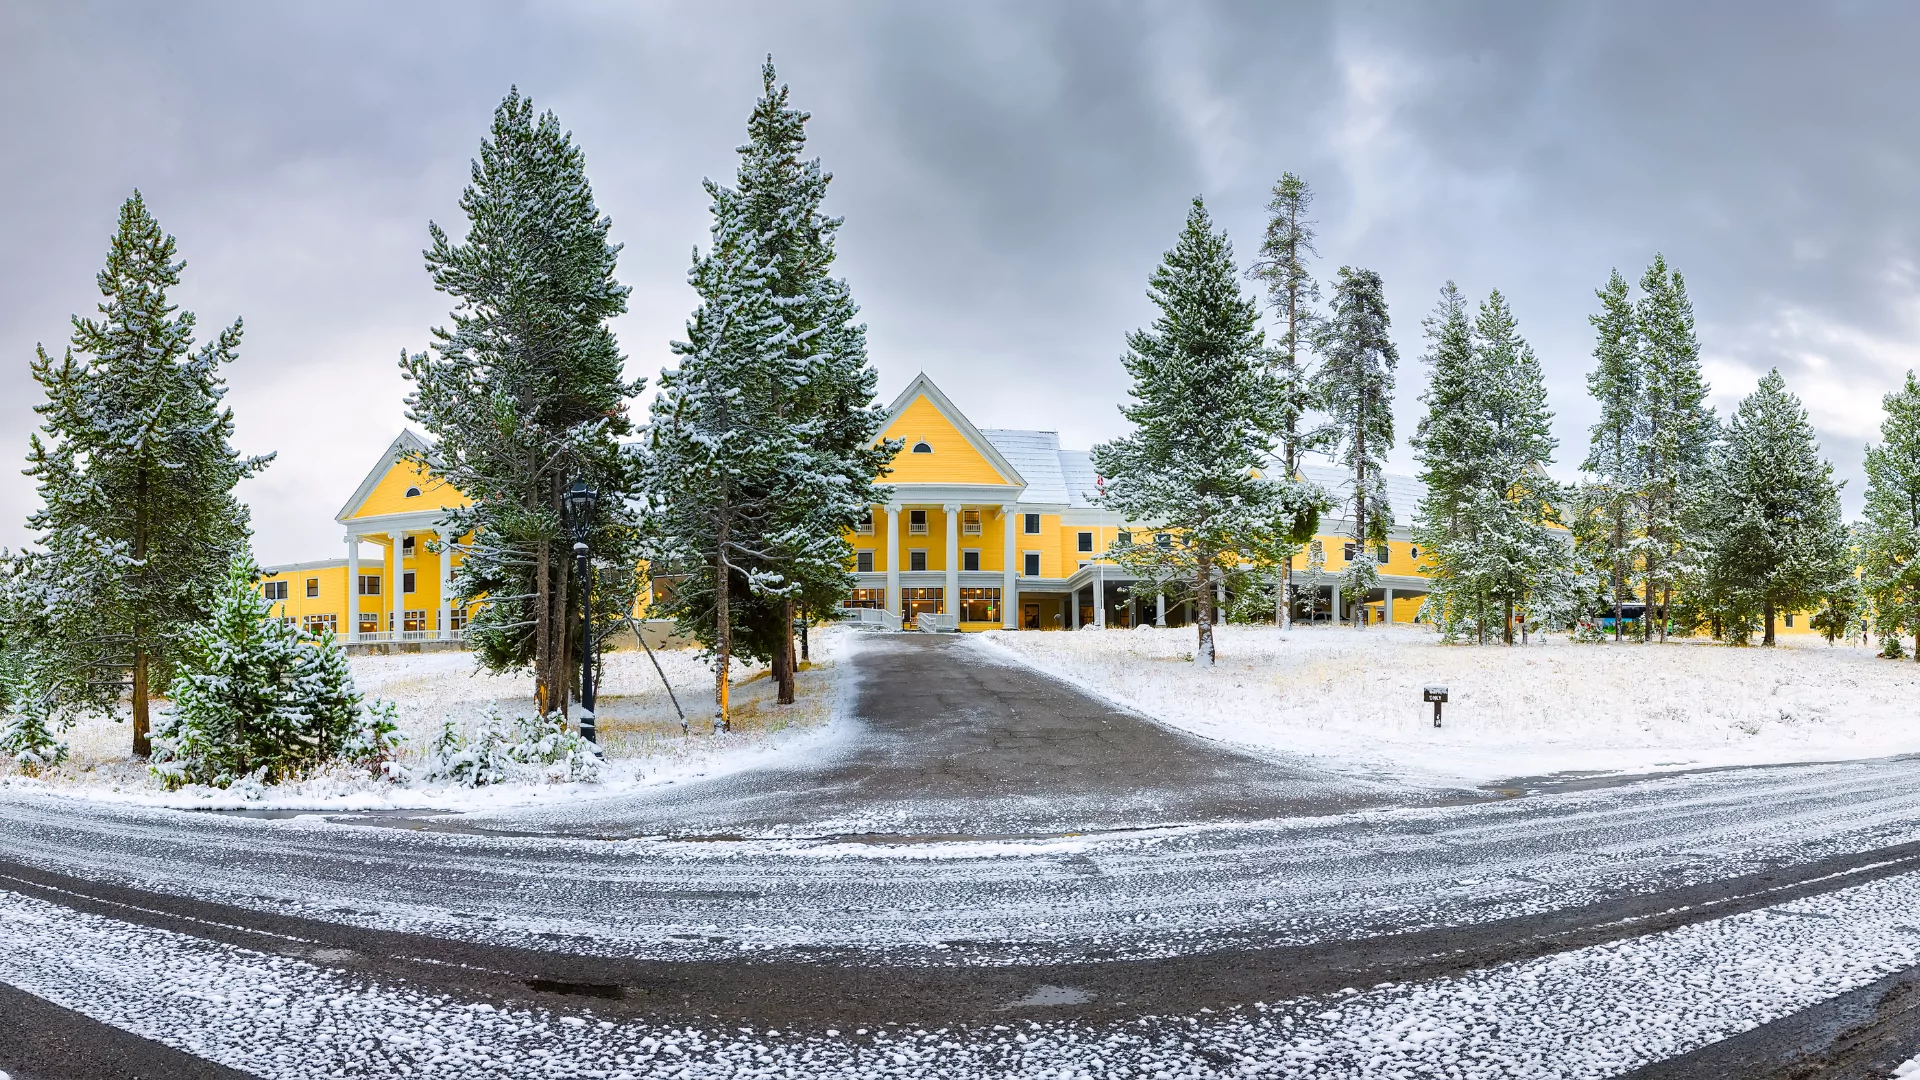 Snowy Yellowstone lodging